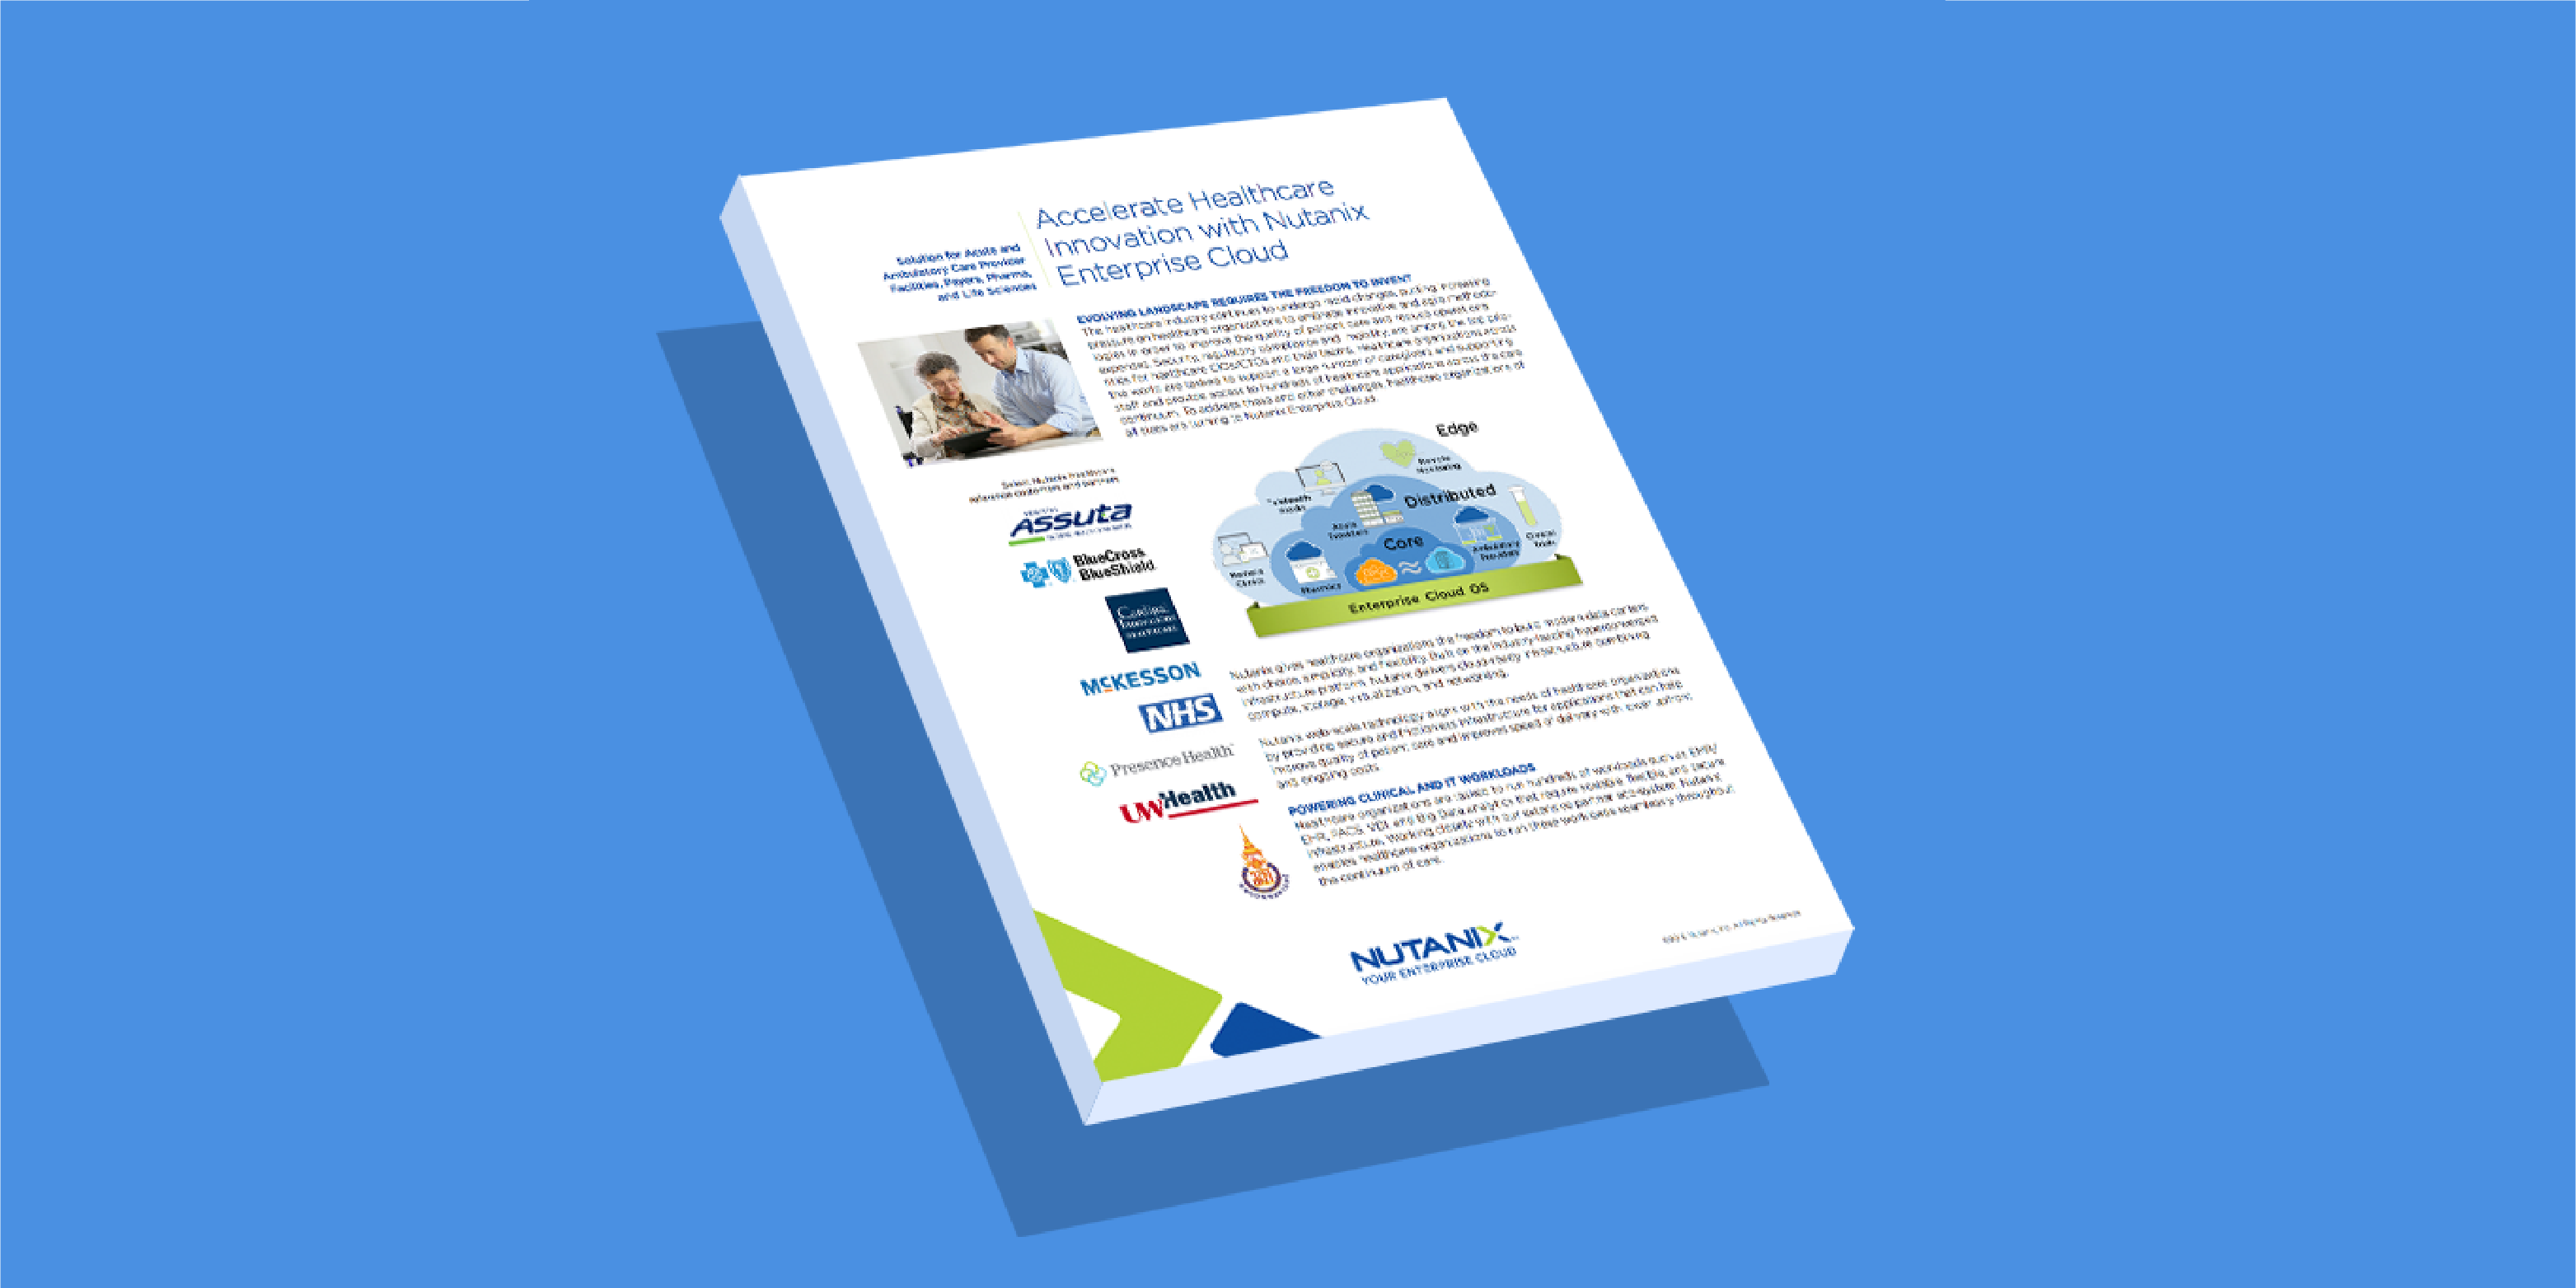 Meeting Healthcare IT Requirements with Nutanix Enterprise Cloud Platform